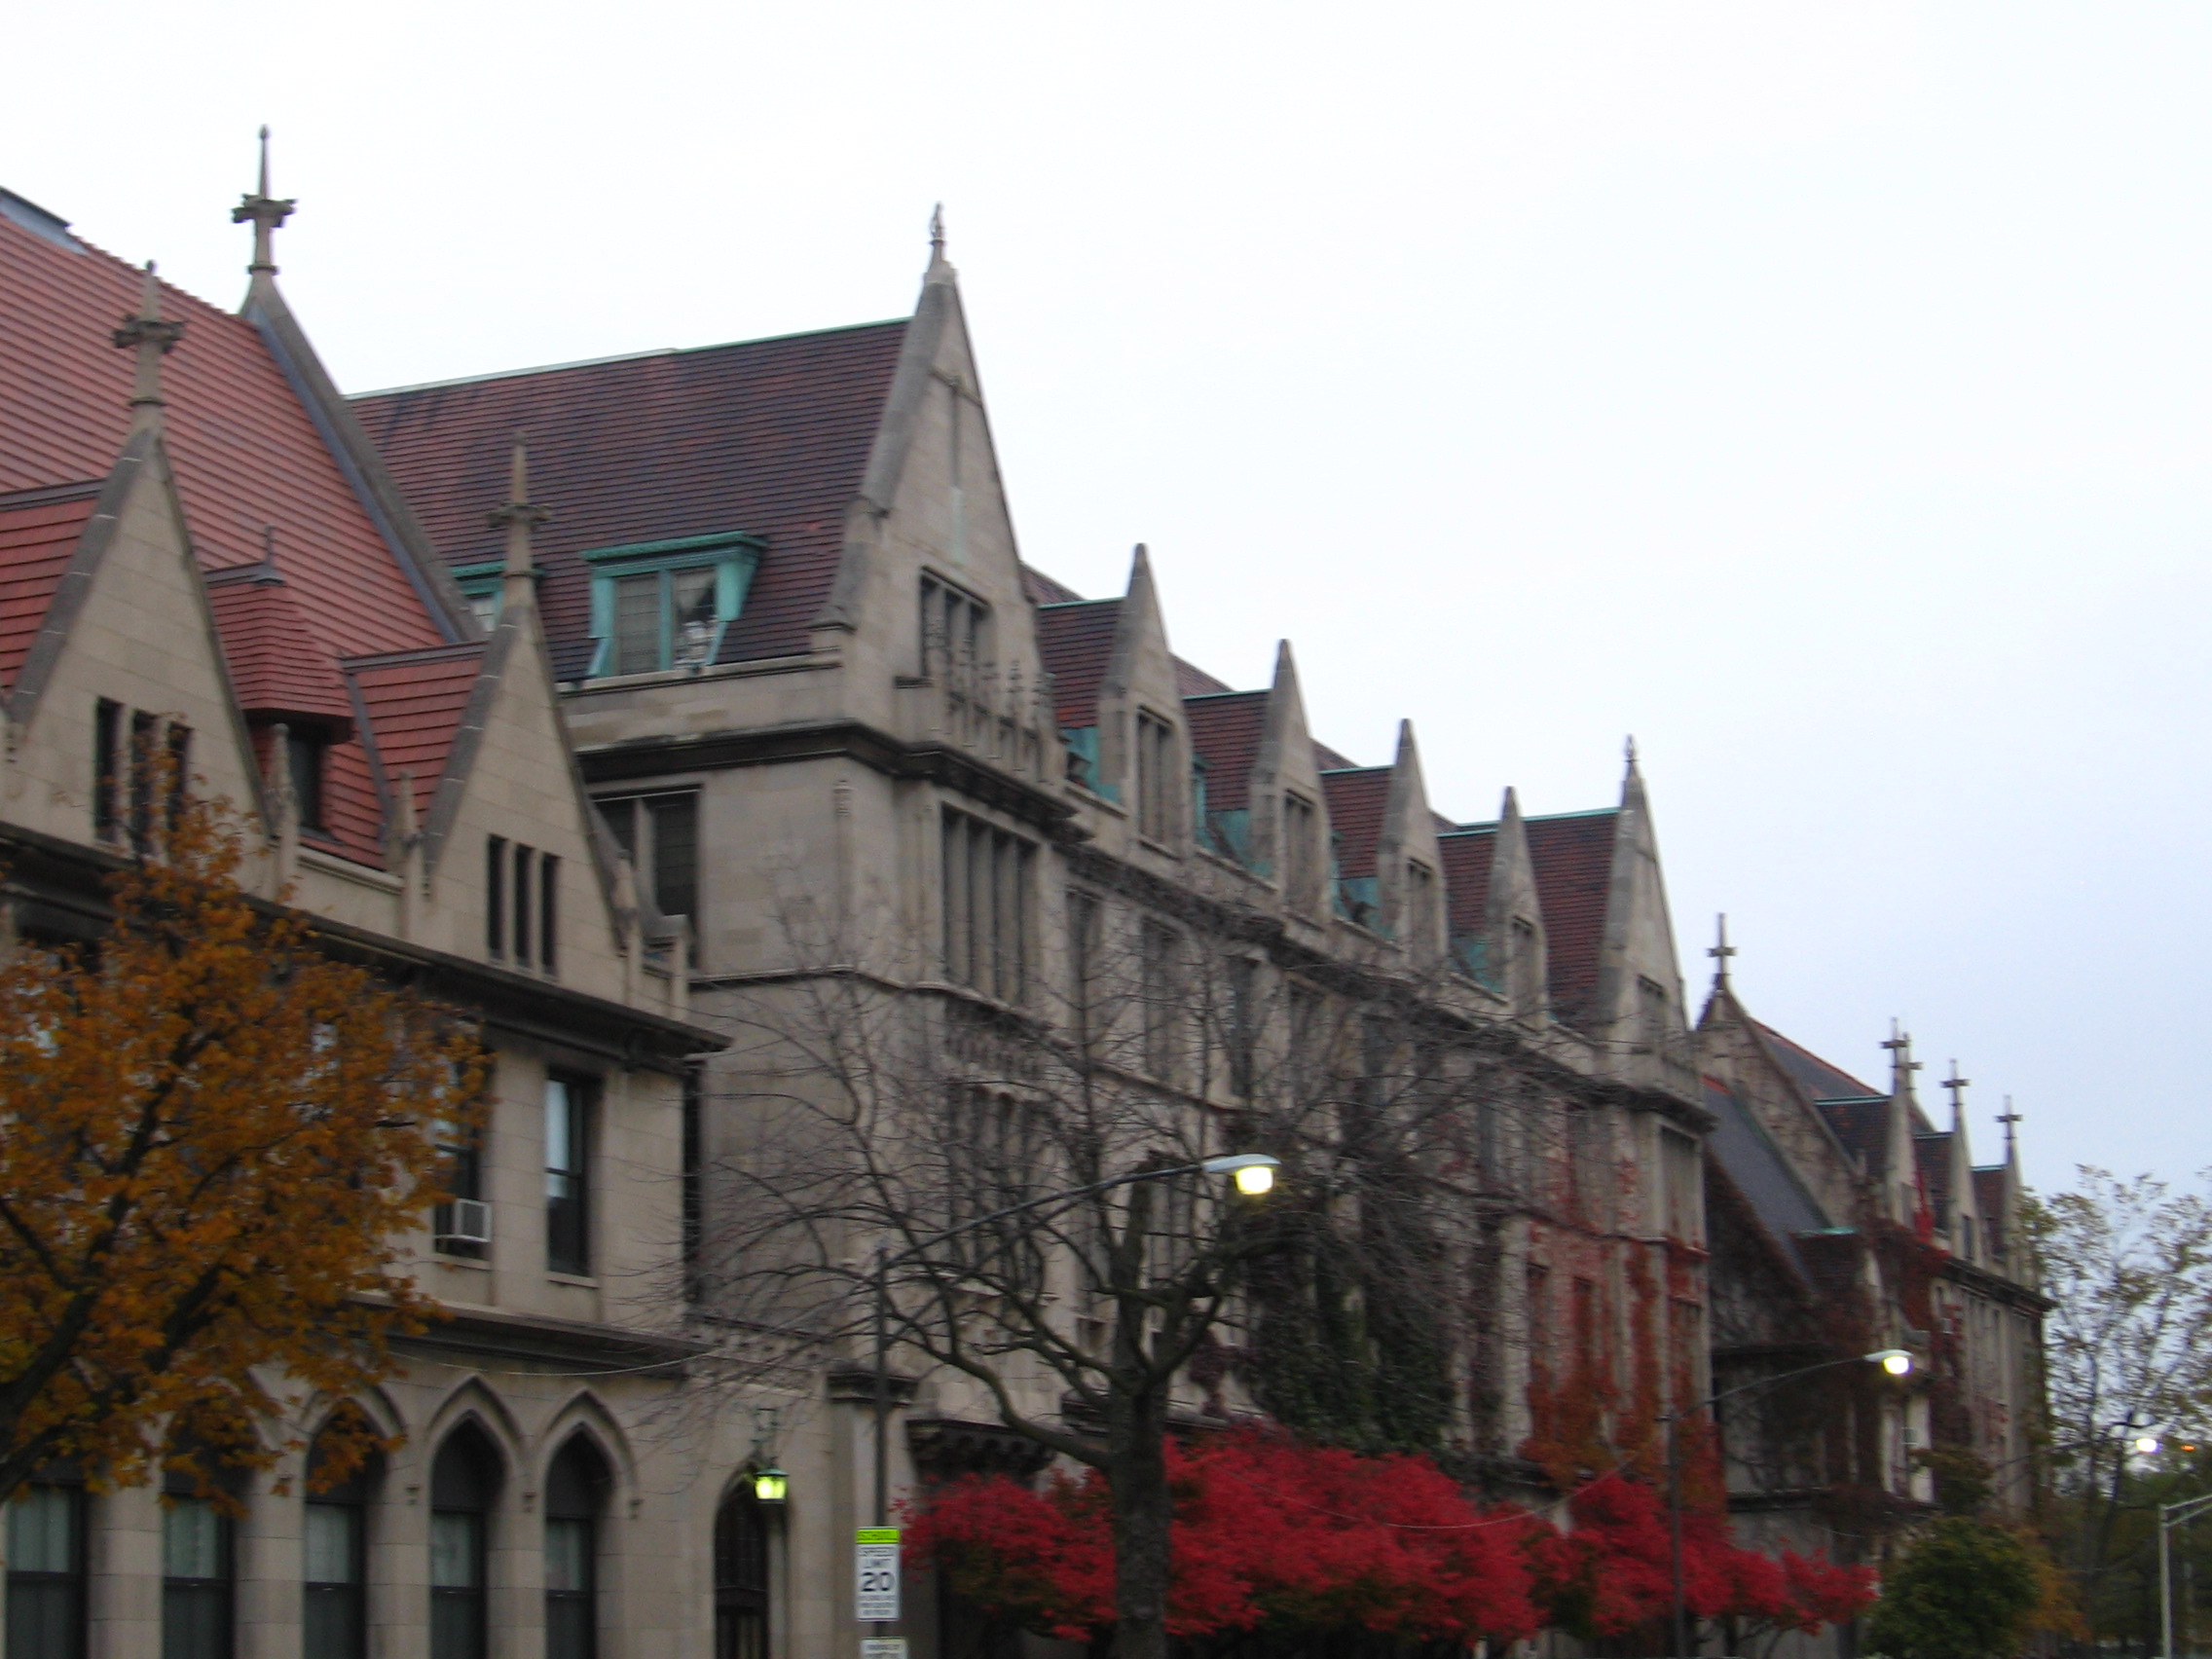 University of Chicago Laboratory Schools